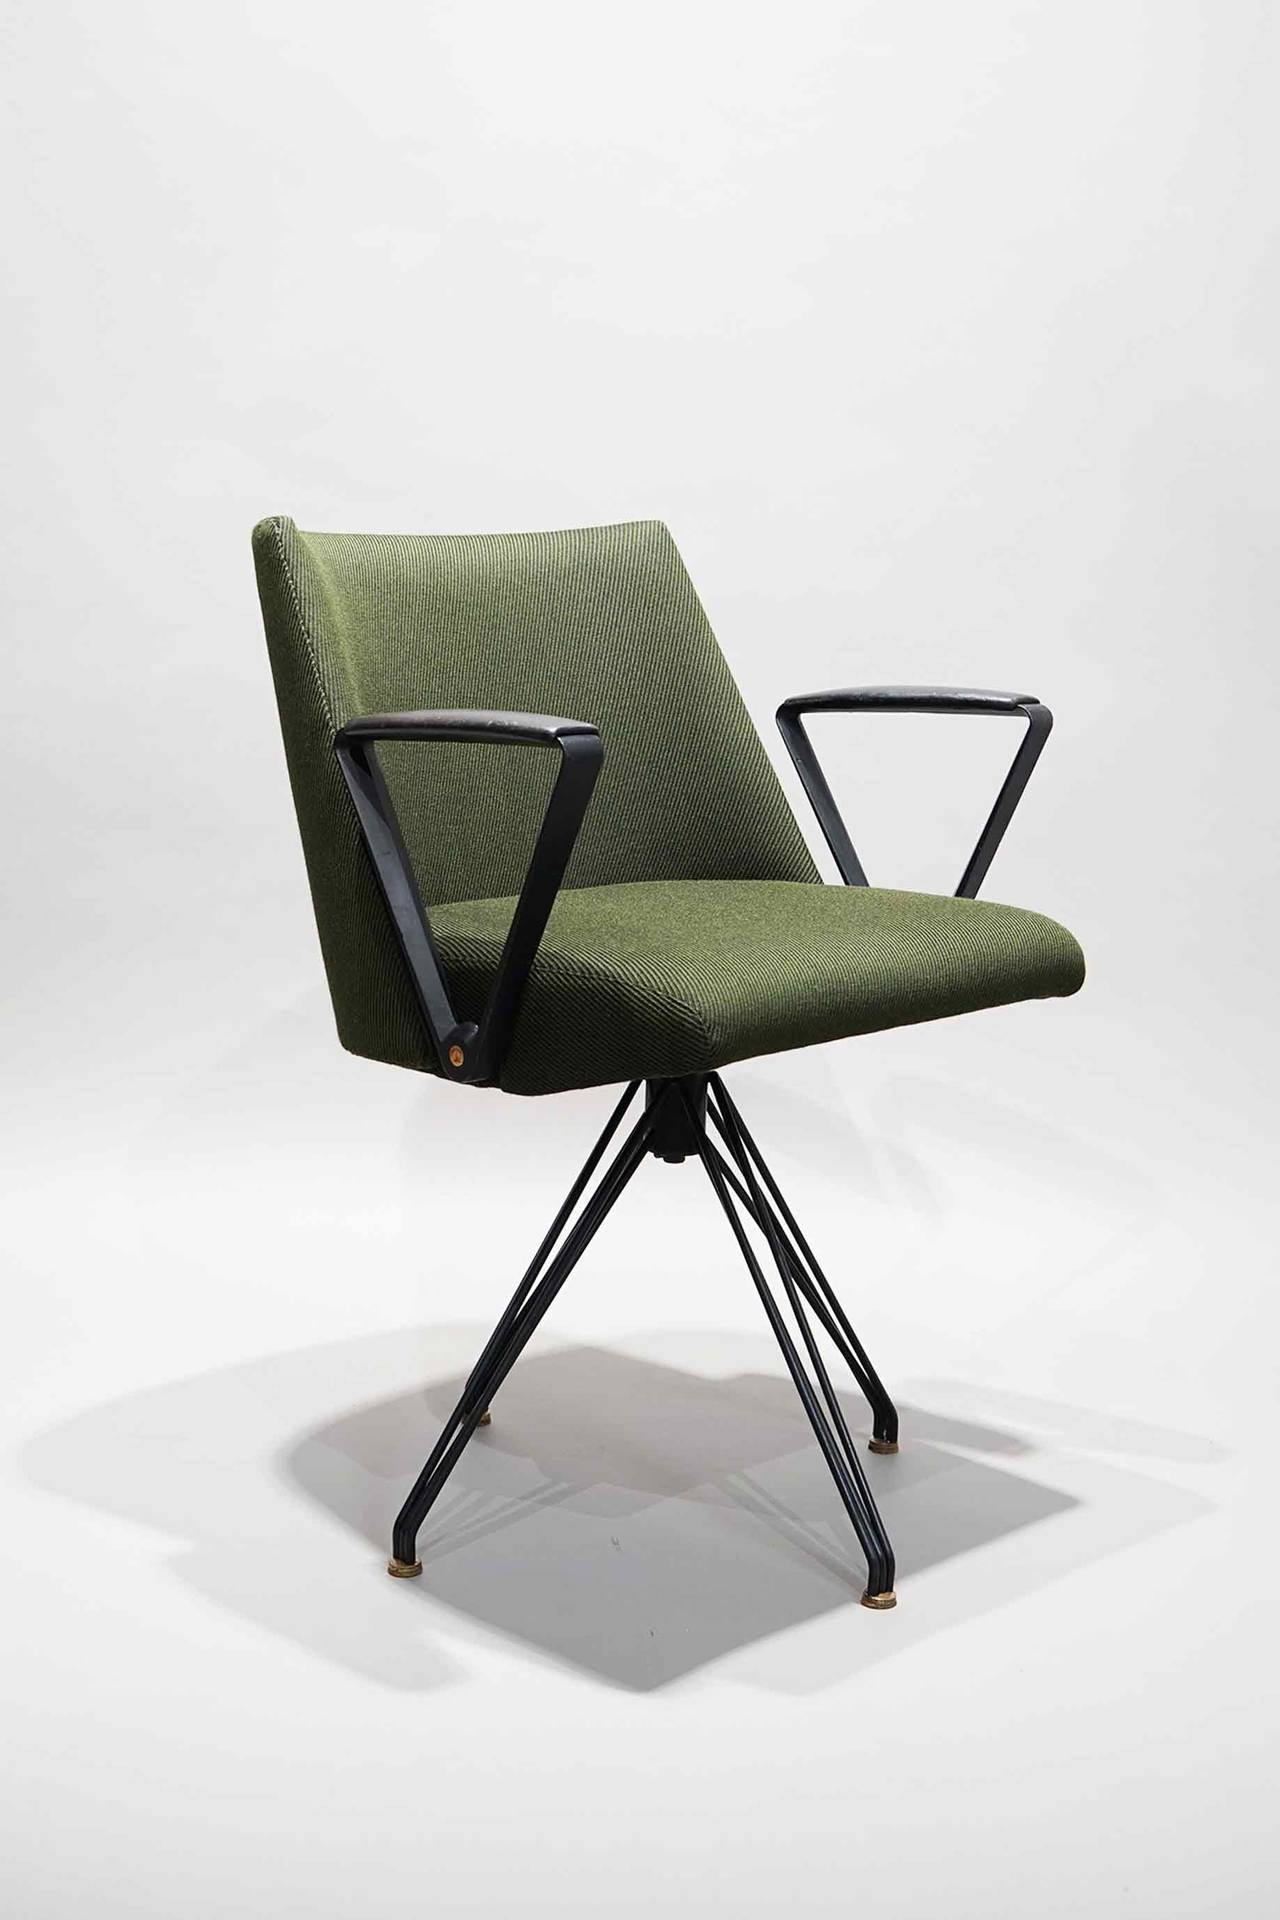 Swivel chair S88 by Osvaldo Borsani, Tecno Milano 1957

renewed upholstery and cover: original >Tecno  wool cover